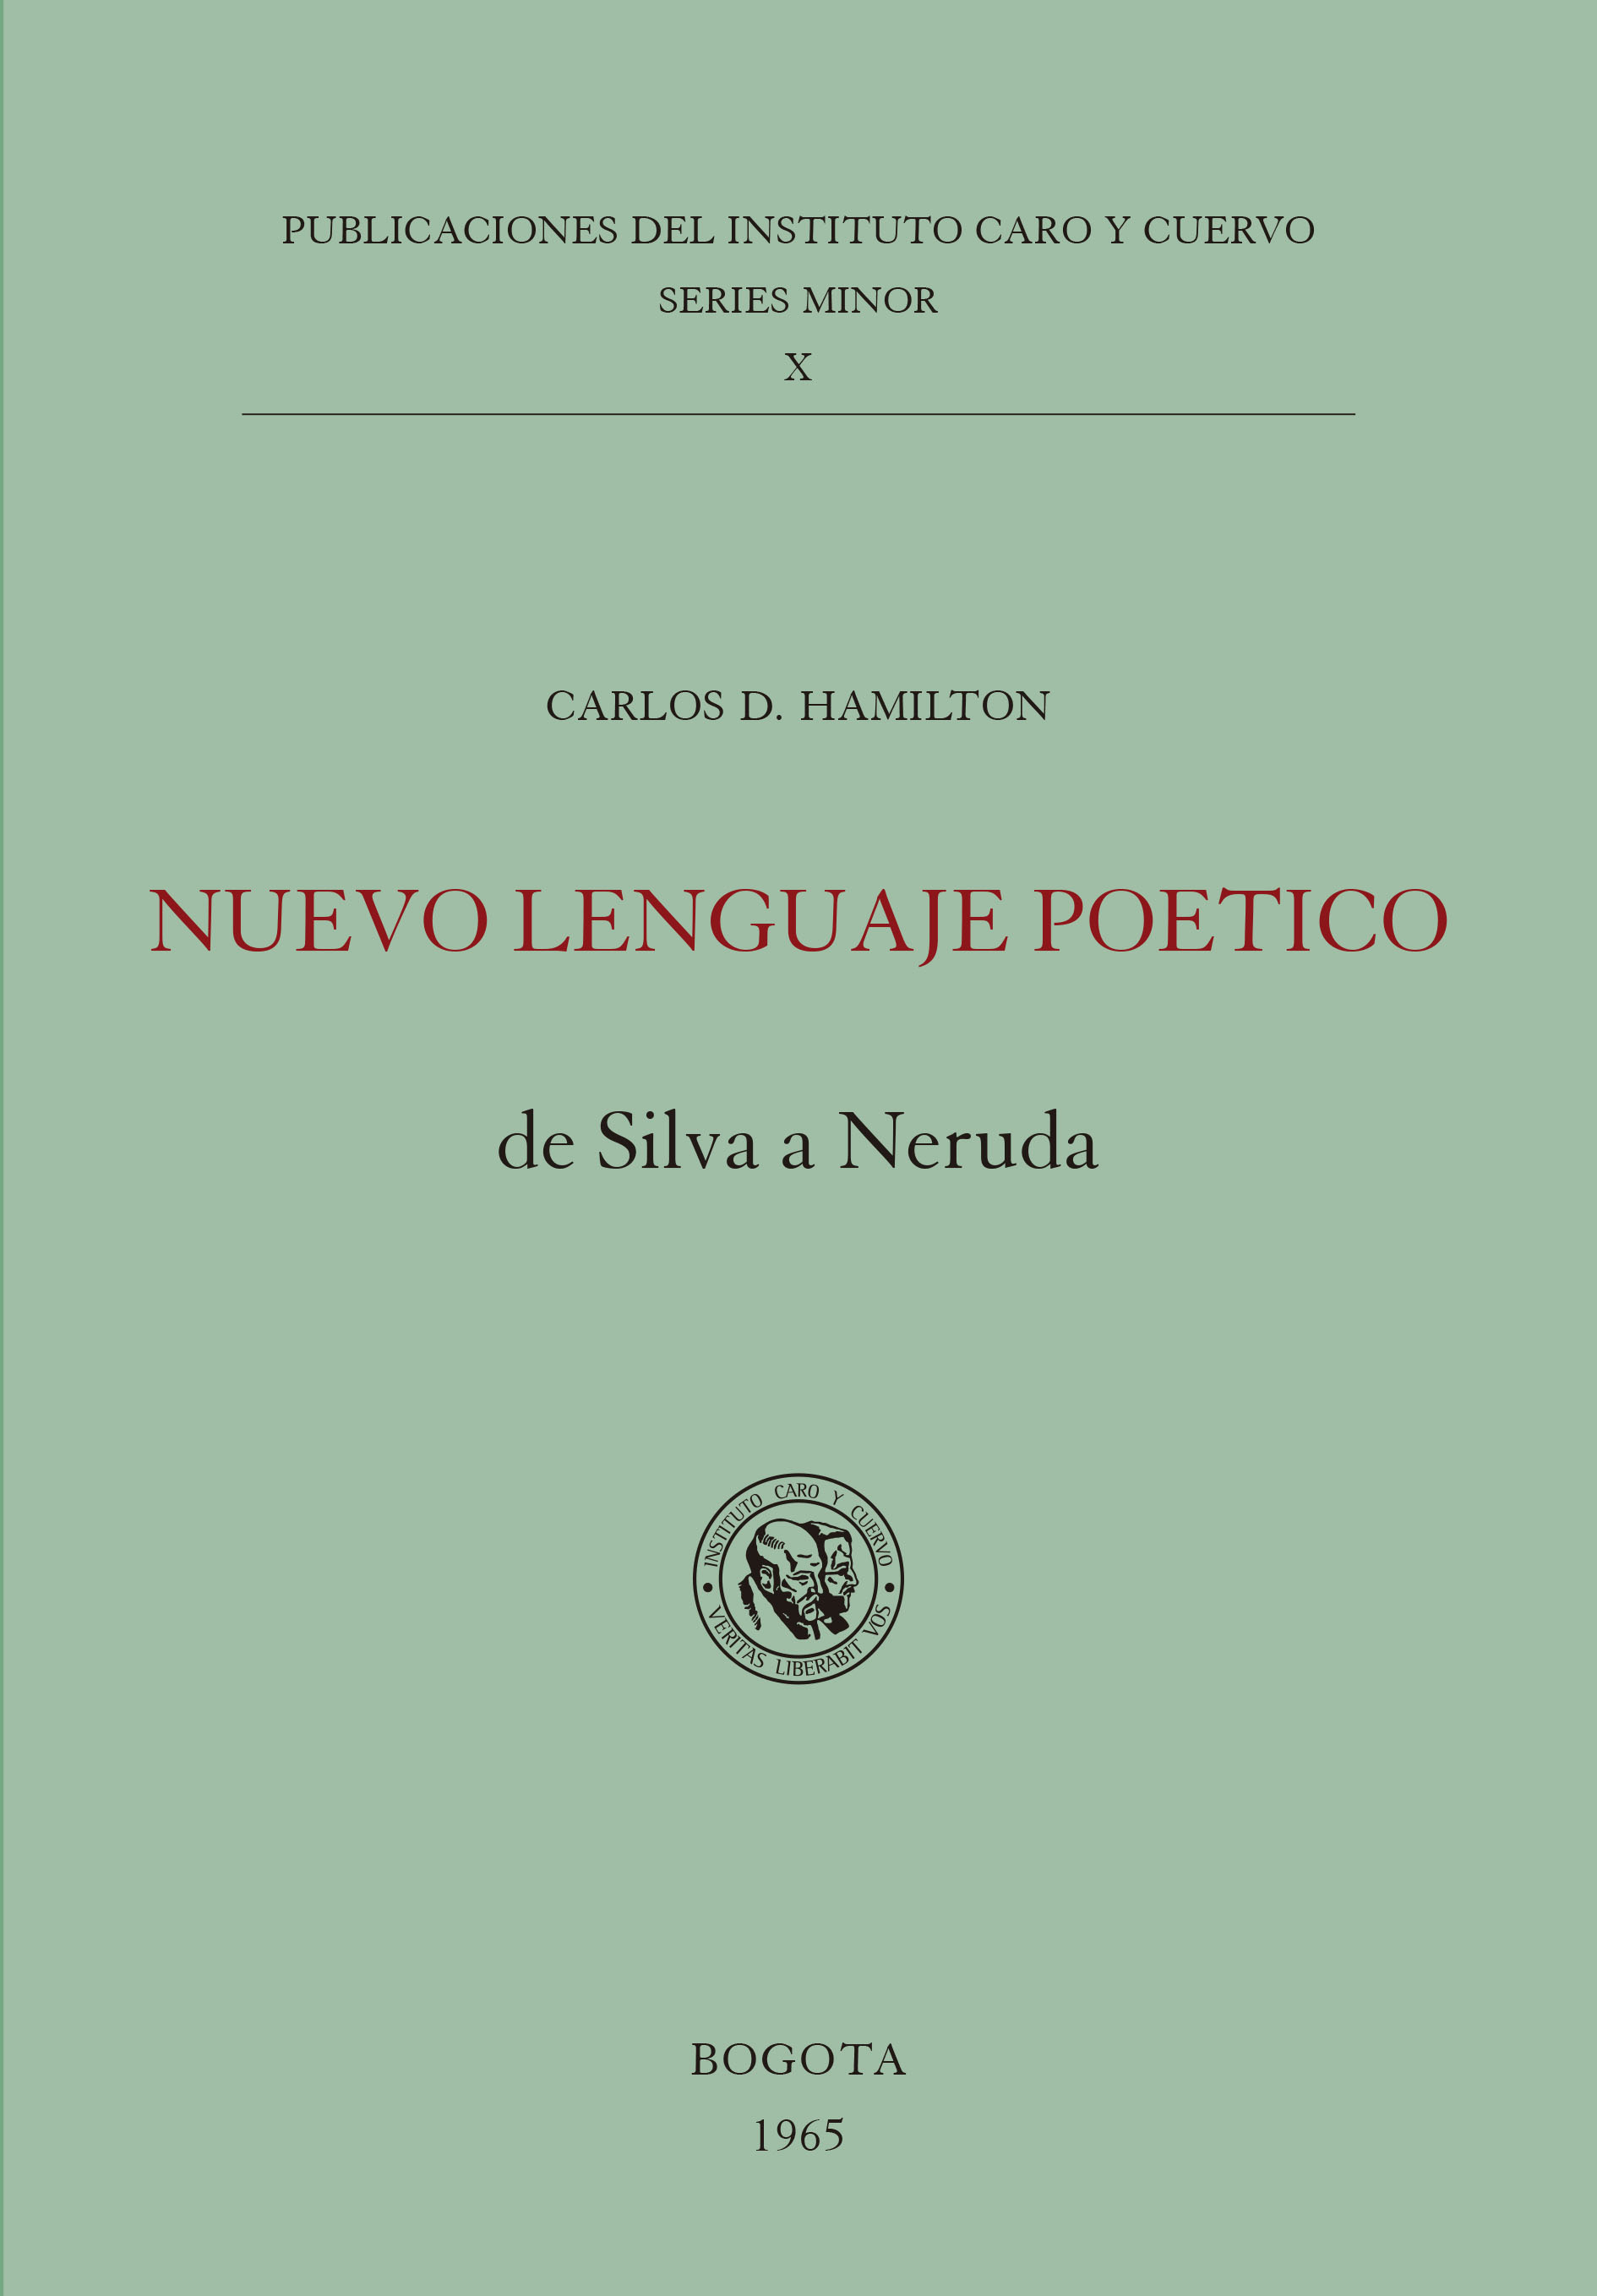 Nuevo lenguaje poético: de Silva a Neruda